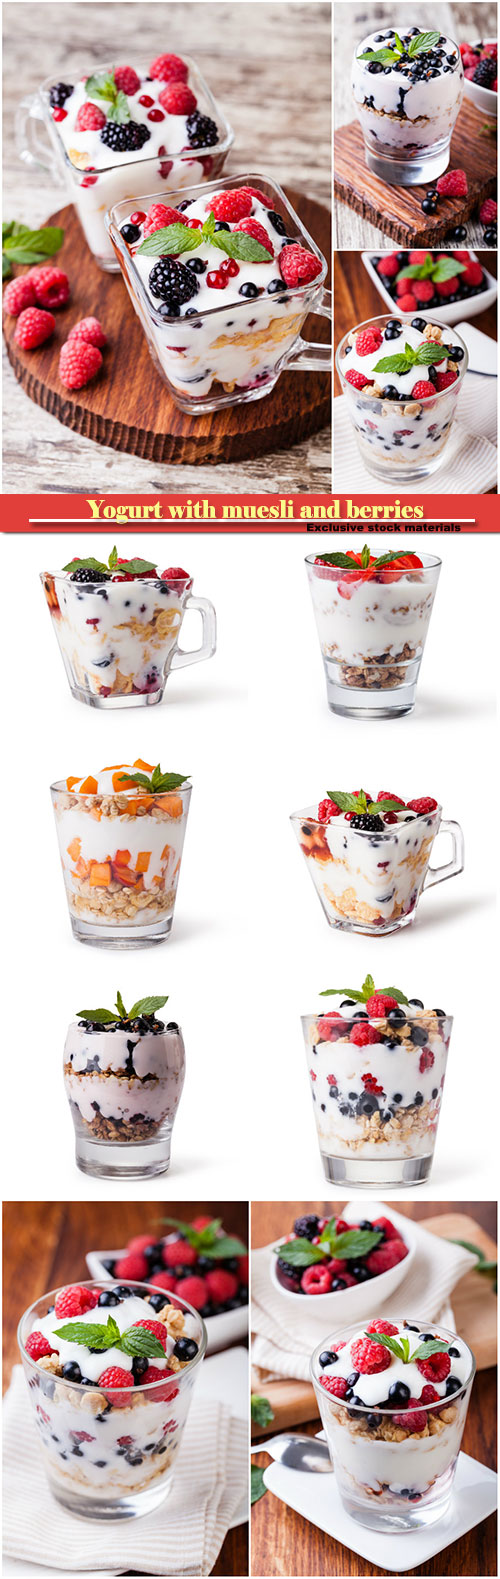 Yogurt with muesli and berries #2